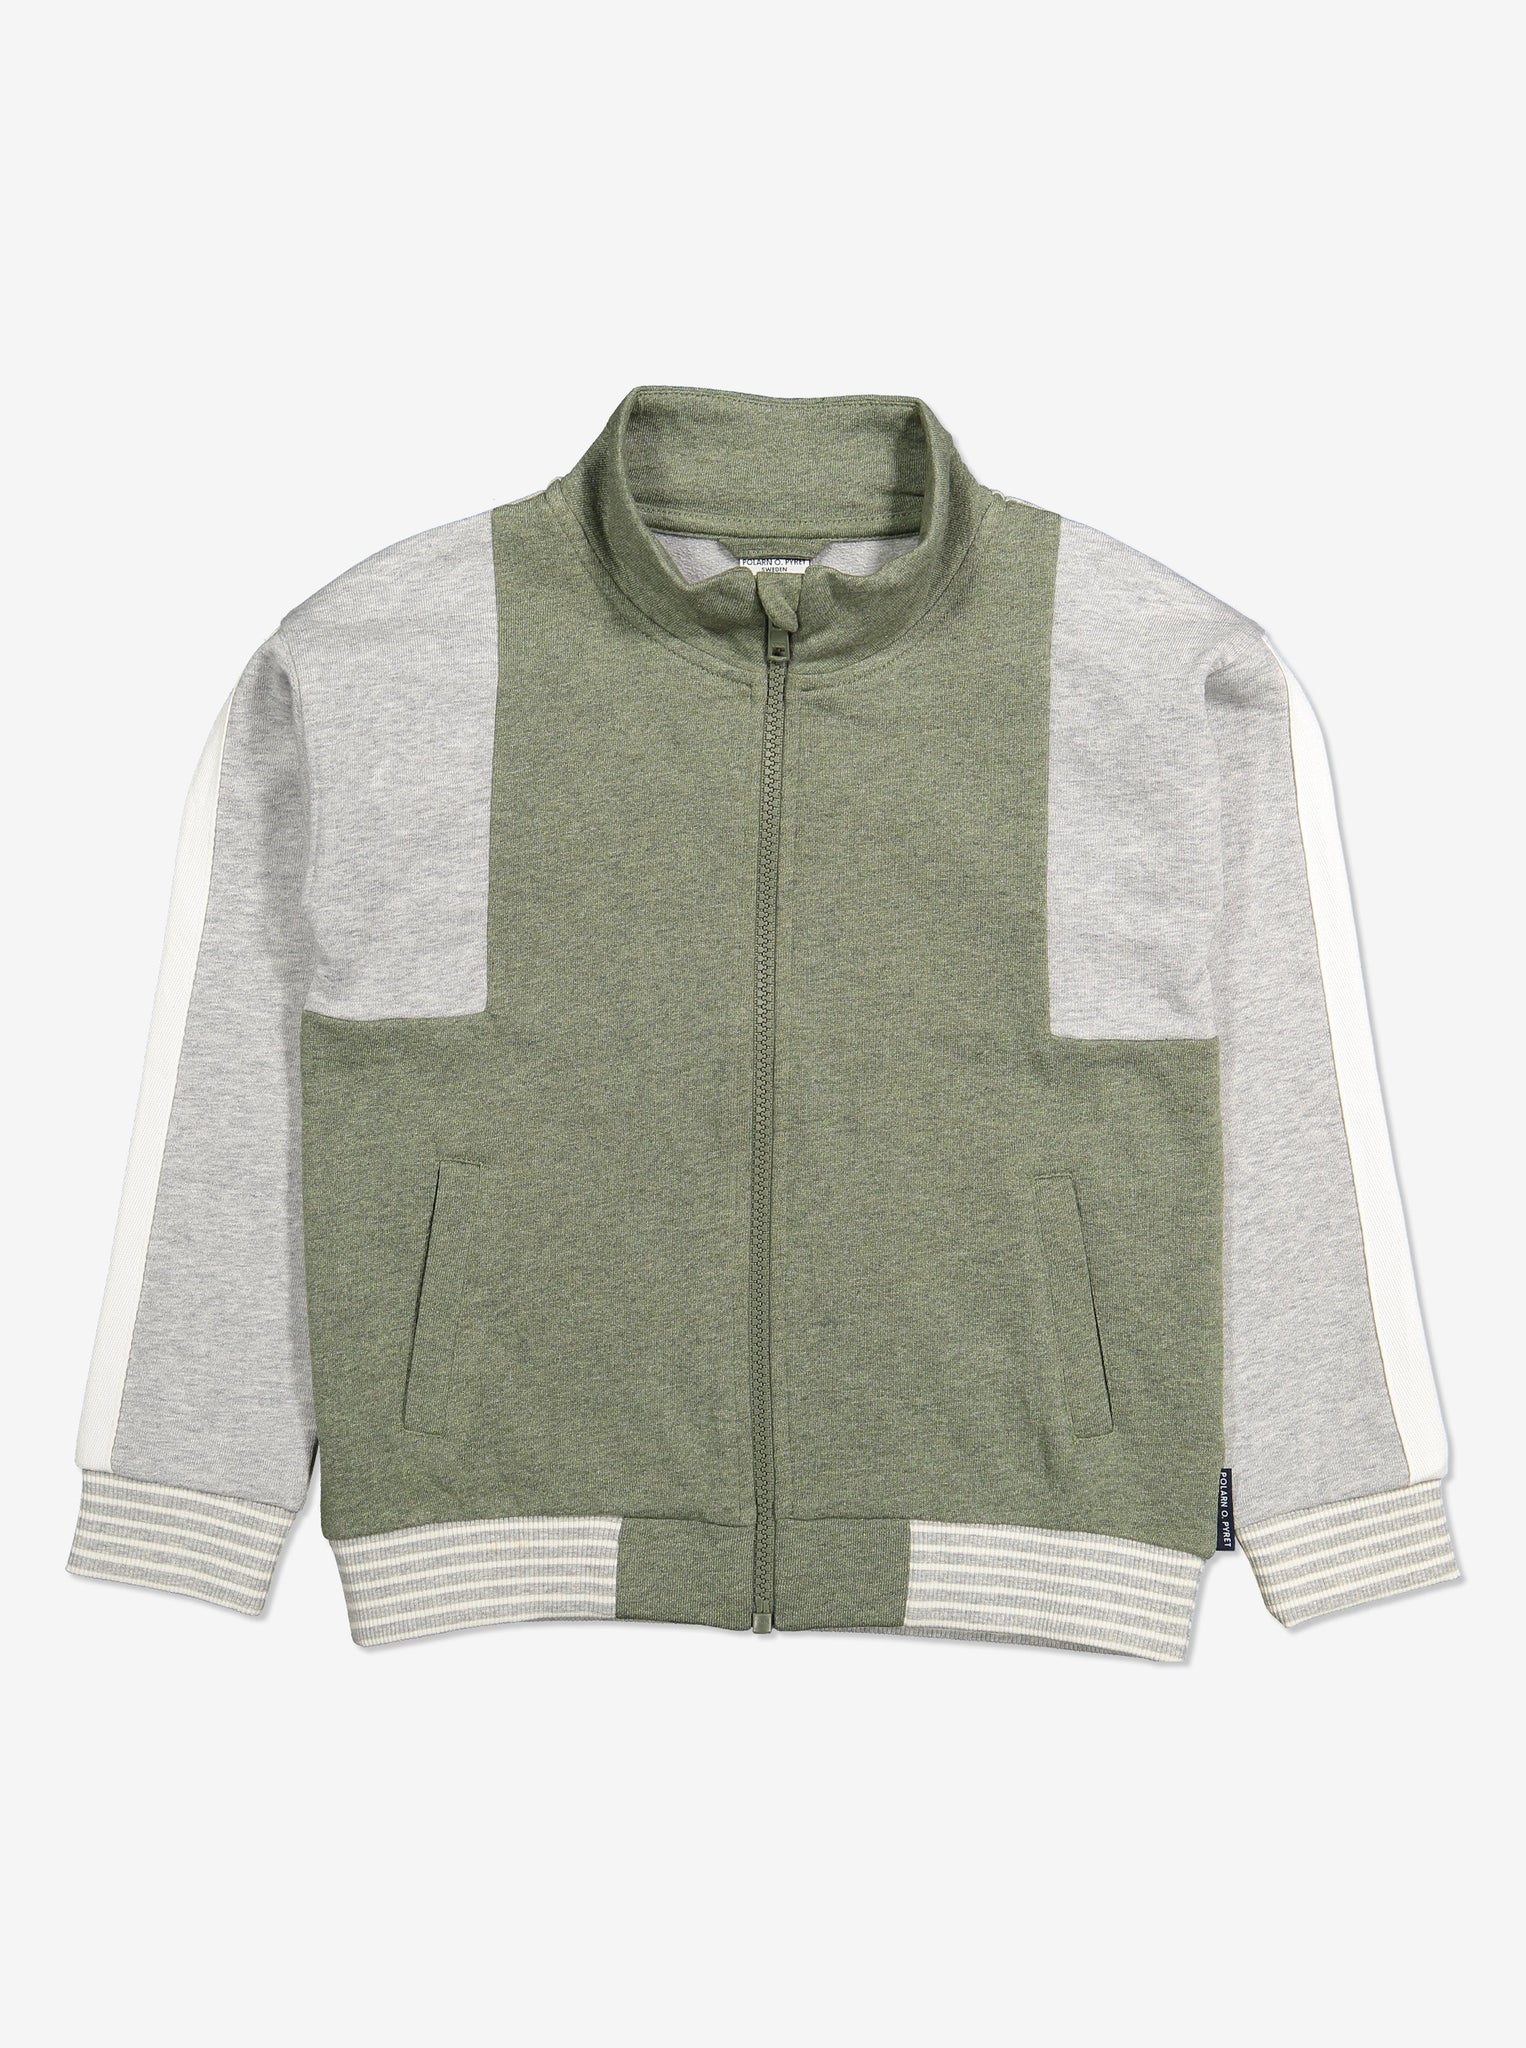 Two-Tone Kids Zipped Sweatshirt-Unisex-1-6y-Green